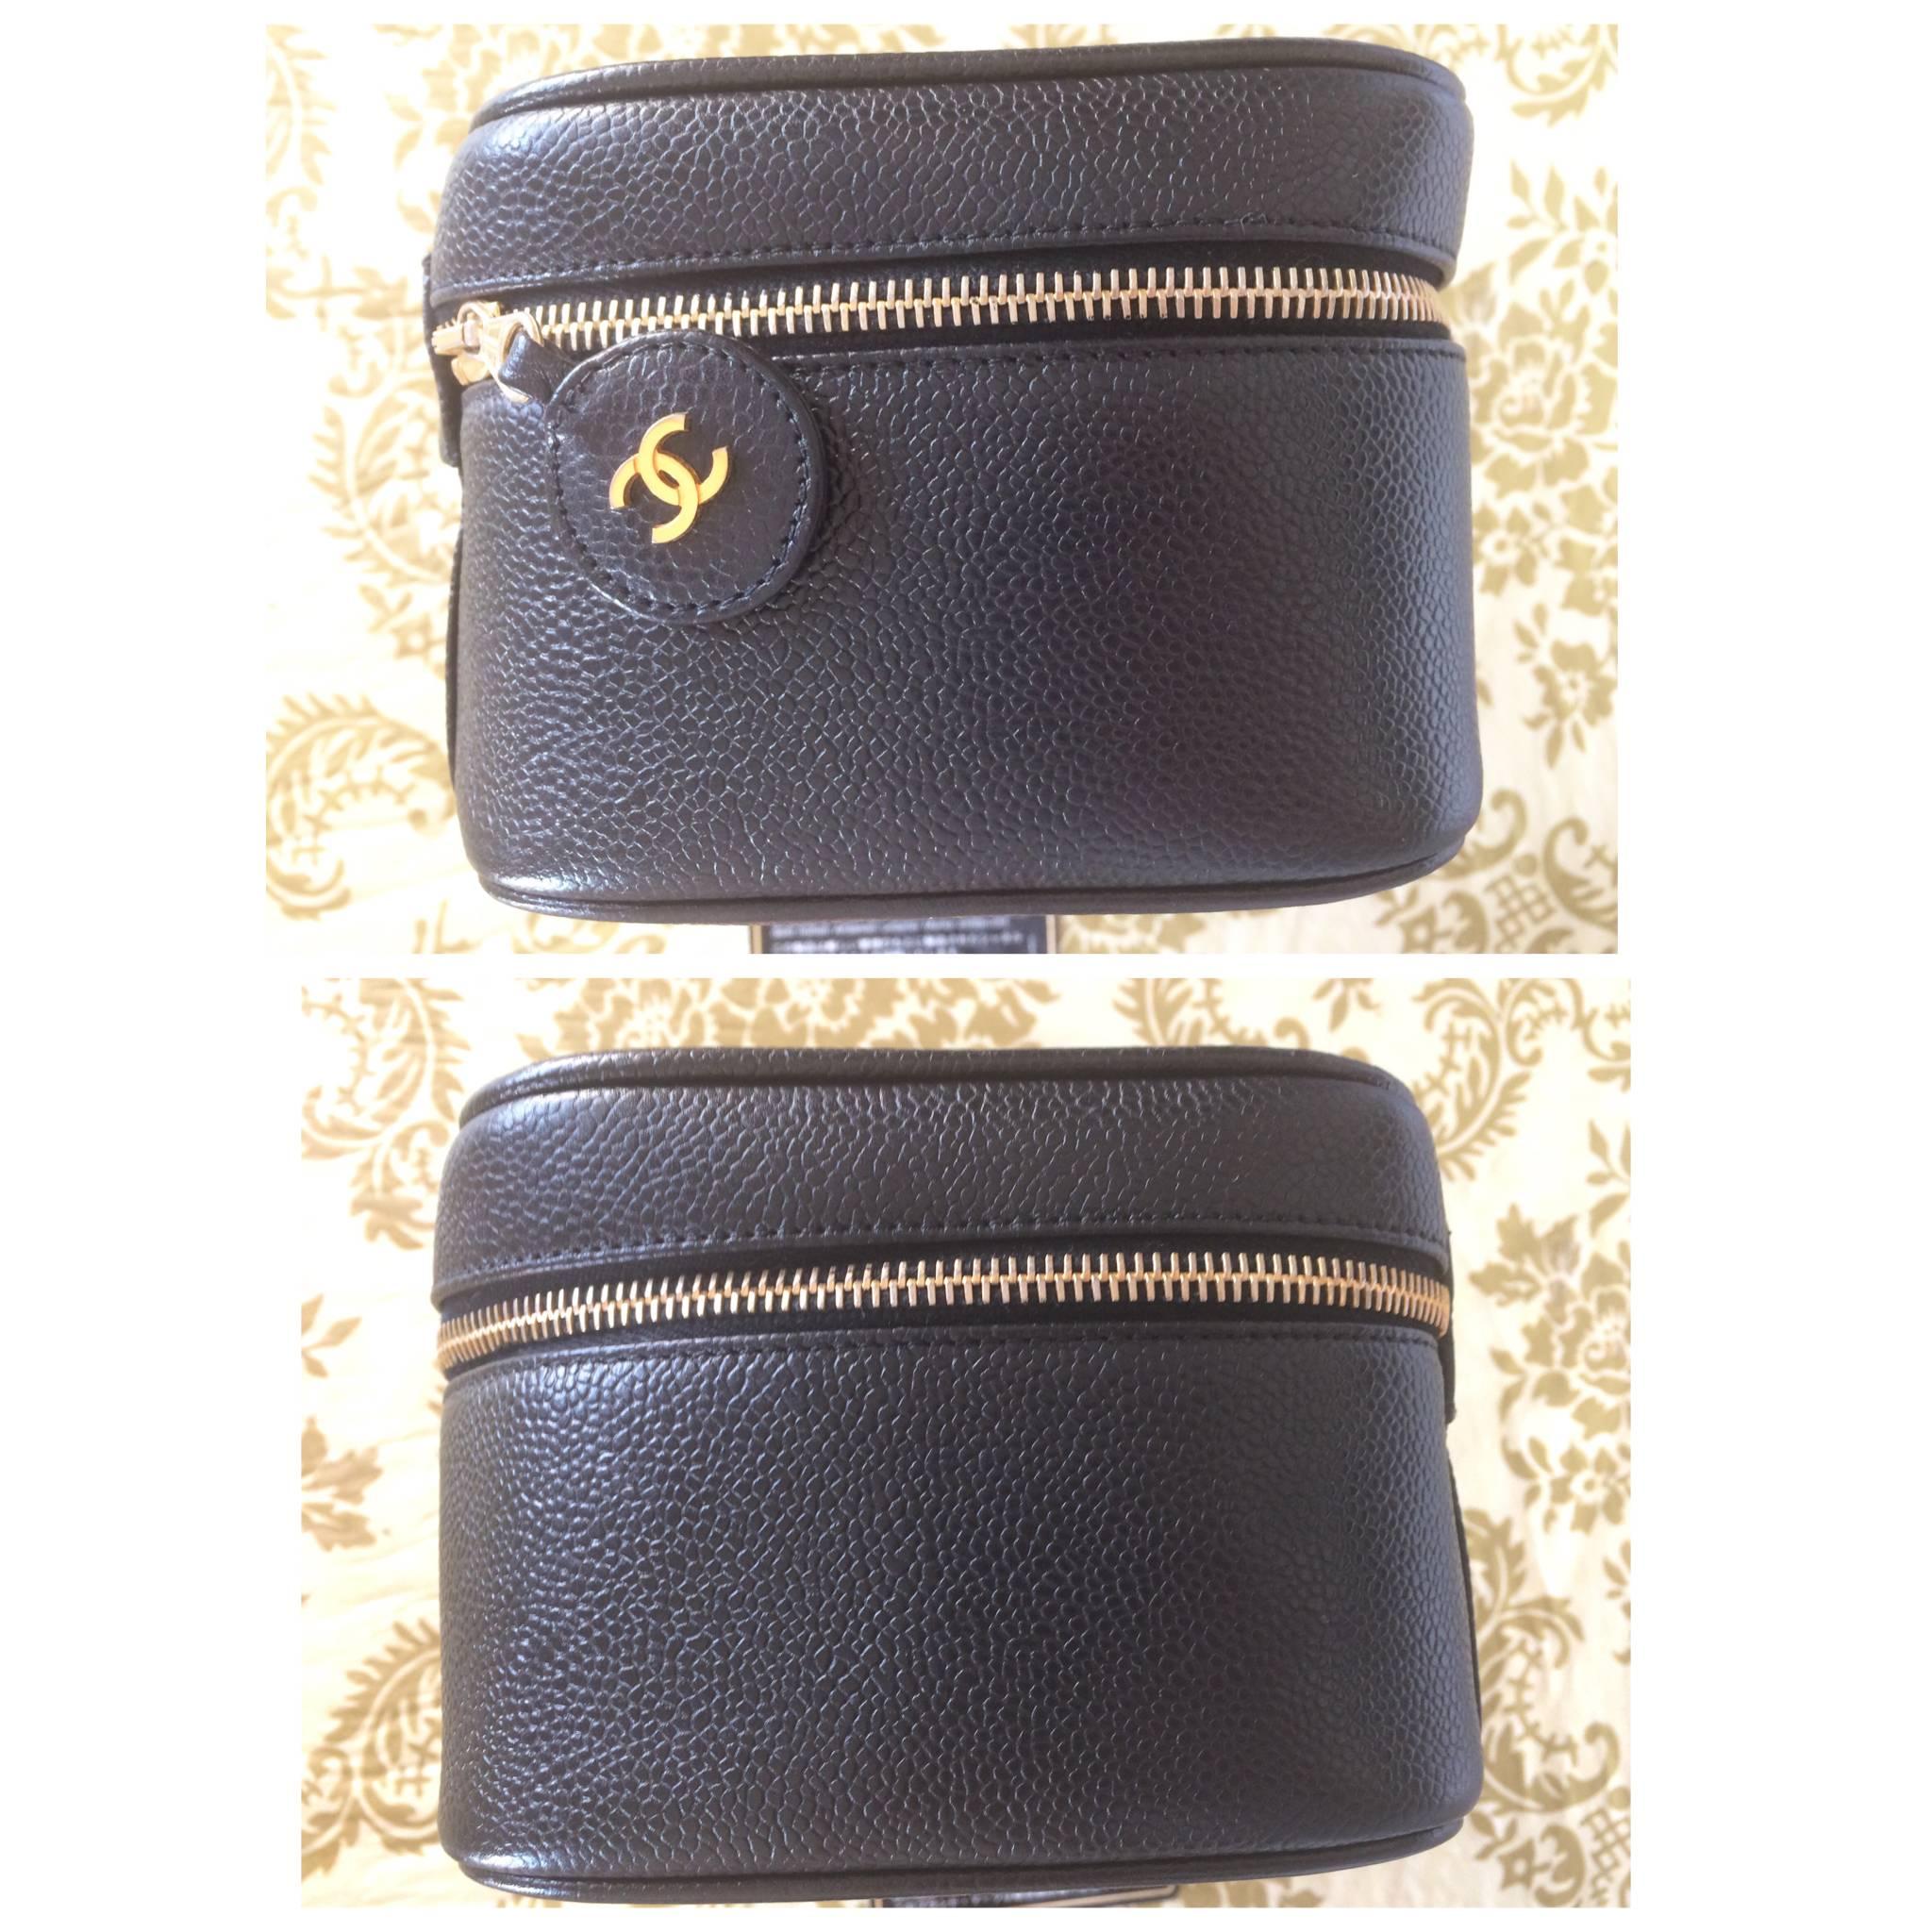 Black Vintage CHANEL black caviar cosmetic case, vanity bag, mini purse with CC mark.